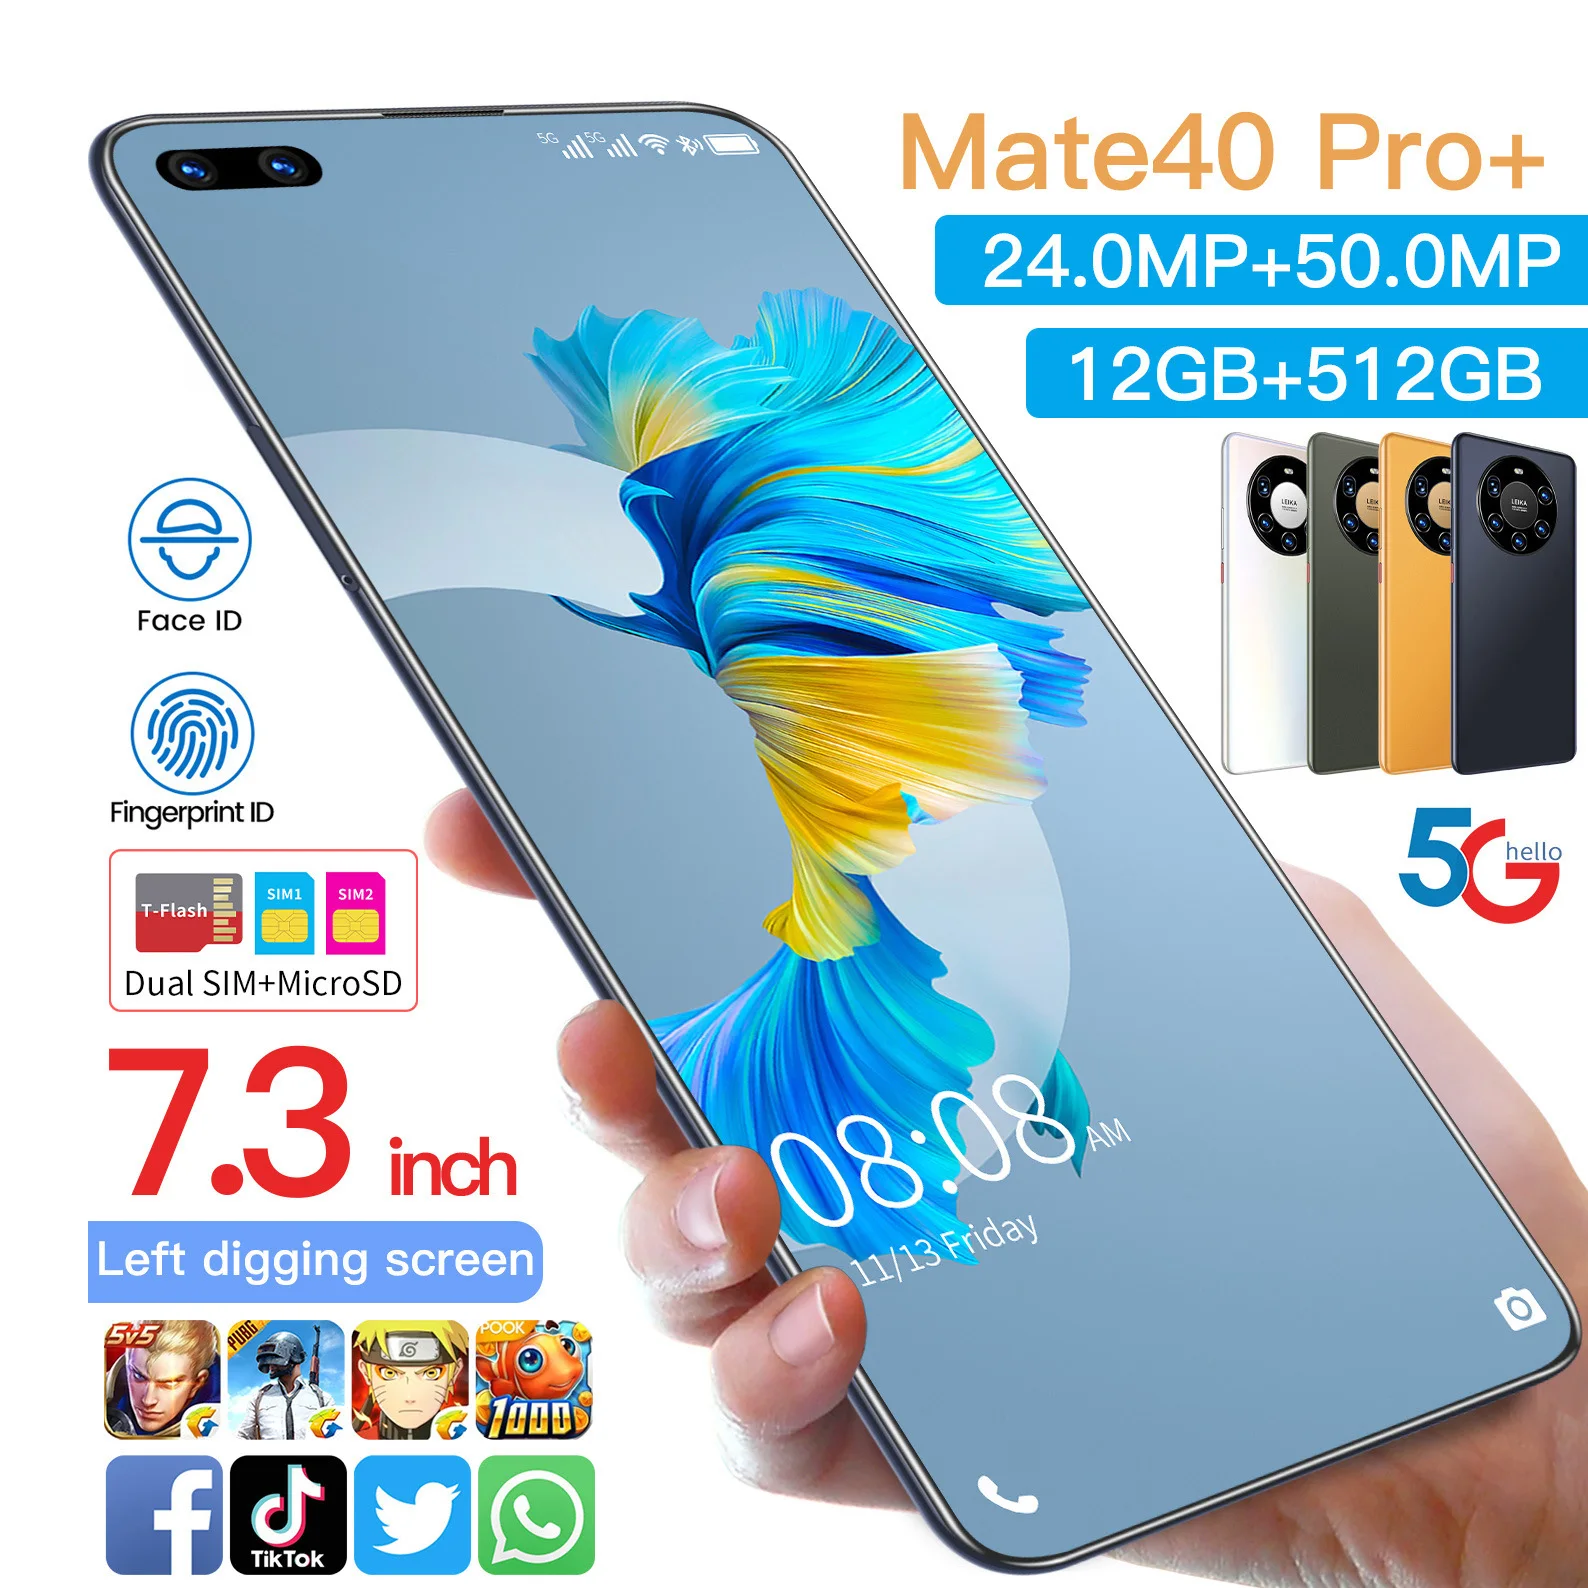 

Hot Selling Mate 40 Pro+ face fingerprint unlock full Display Android 10.0 CellPhone Smart Mobile Phone, Black yellow gray white